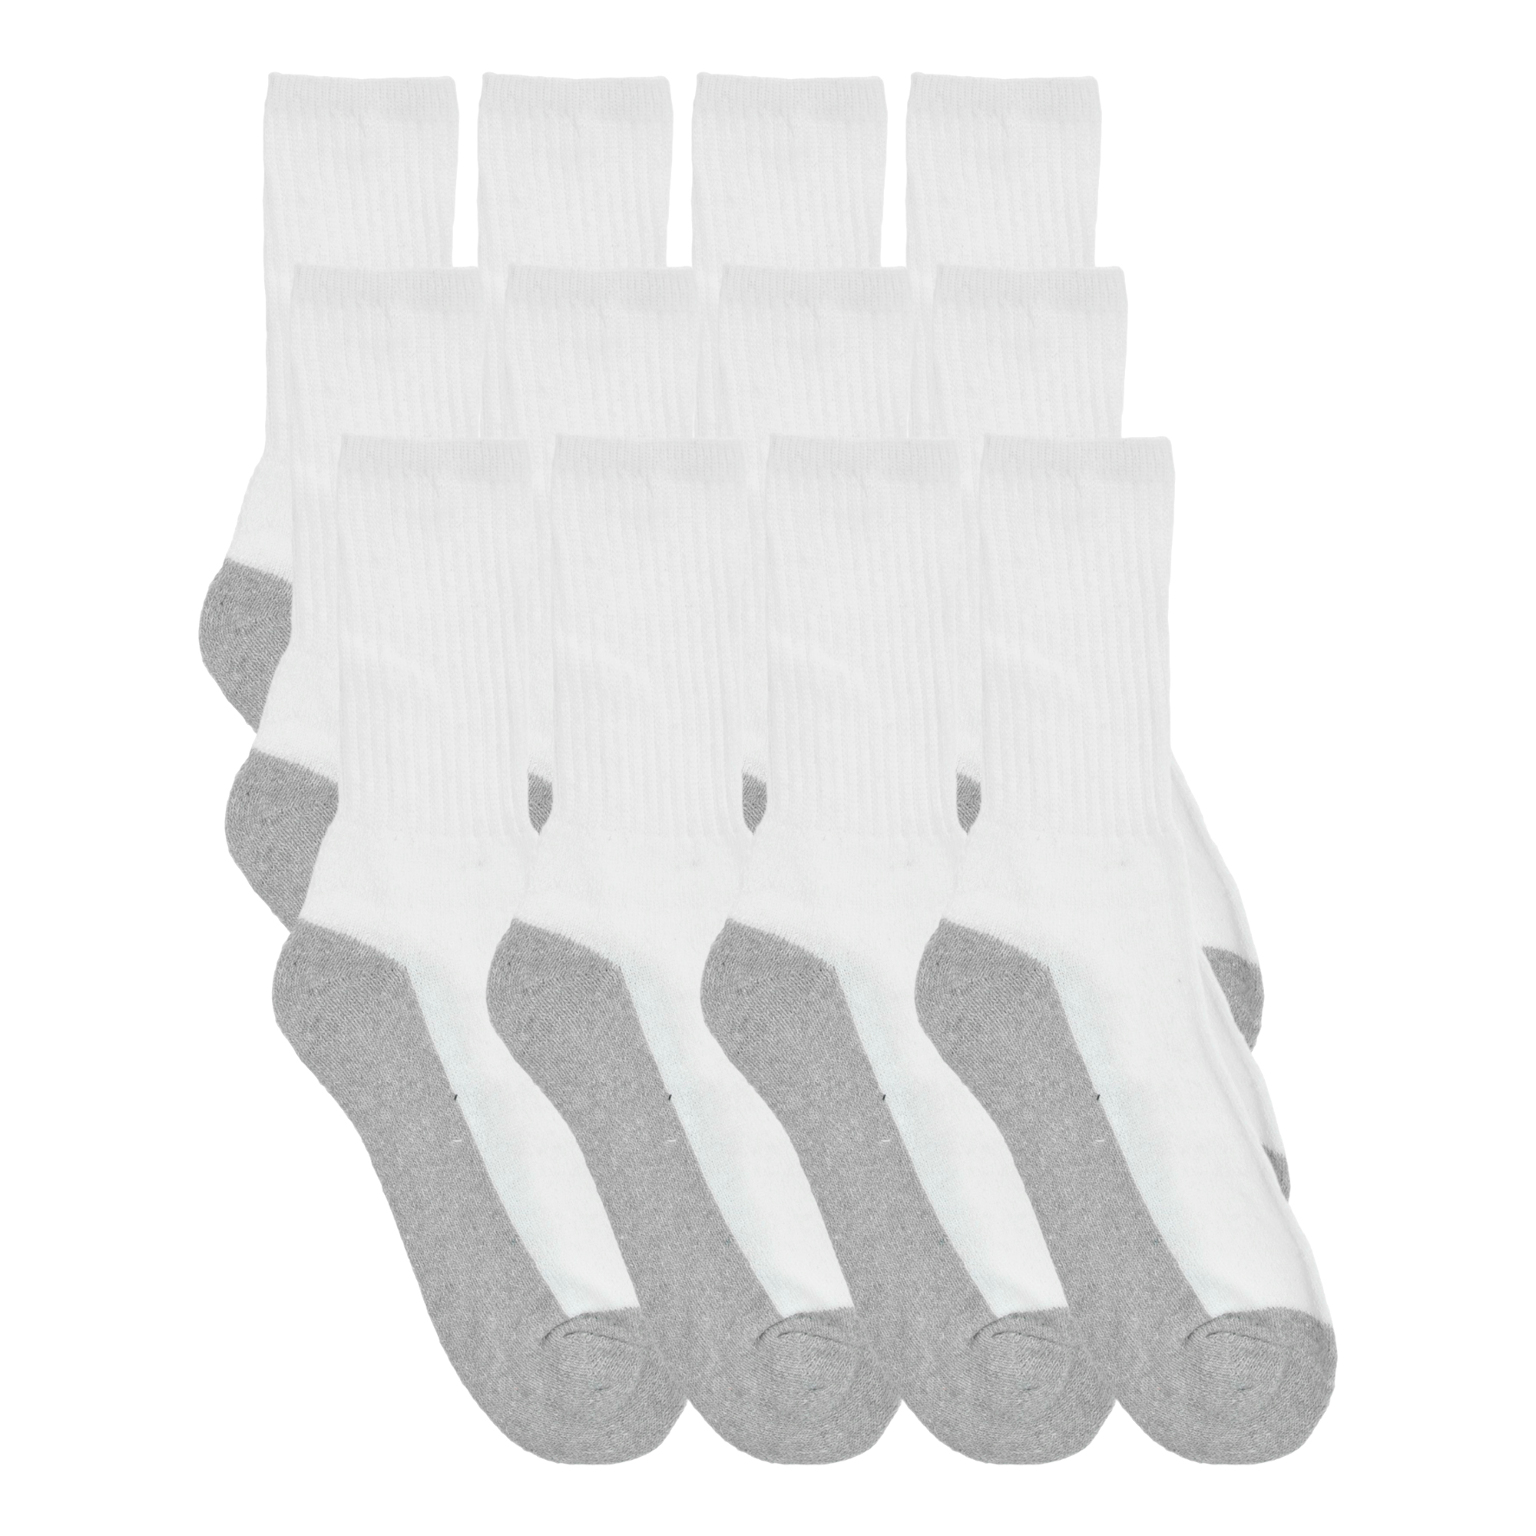 Unisex White / Grey Cotton Blend Sports Sock - Size S / M(240x$0.67)